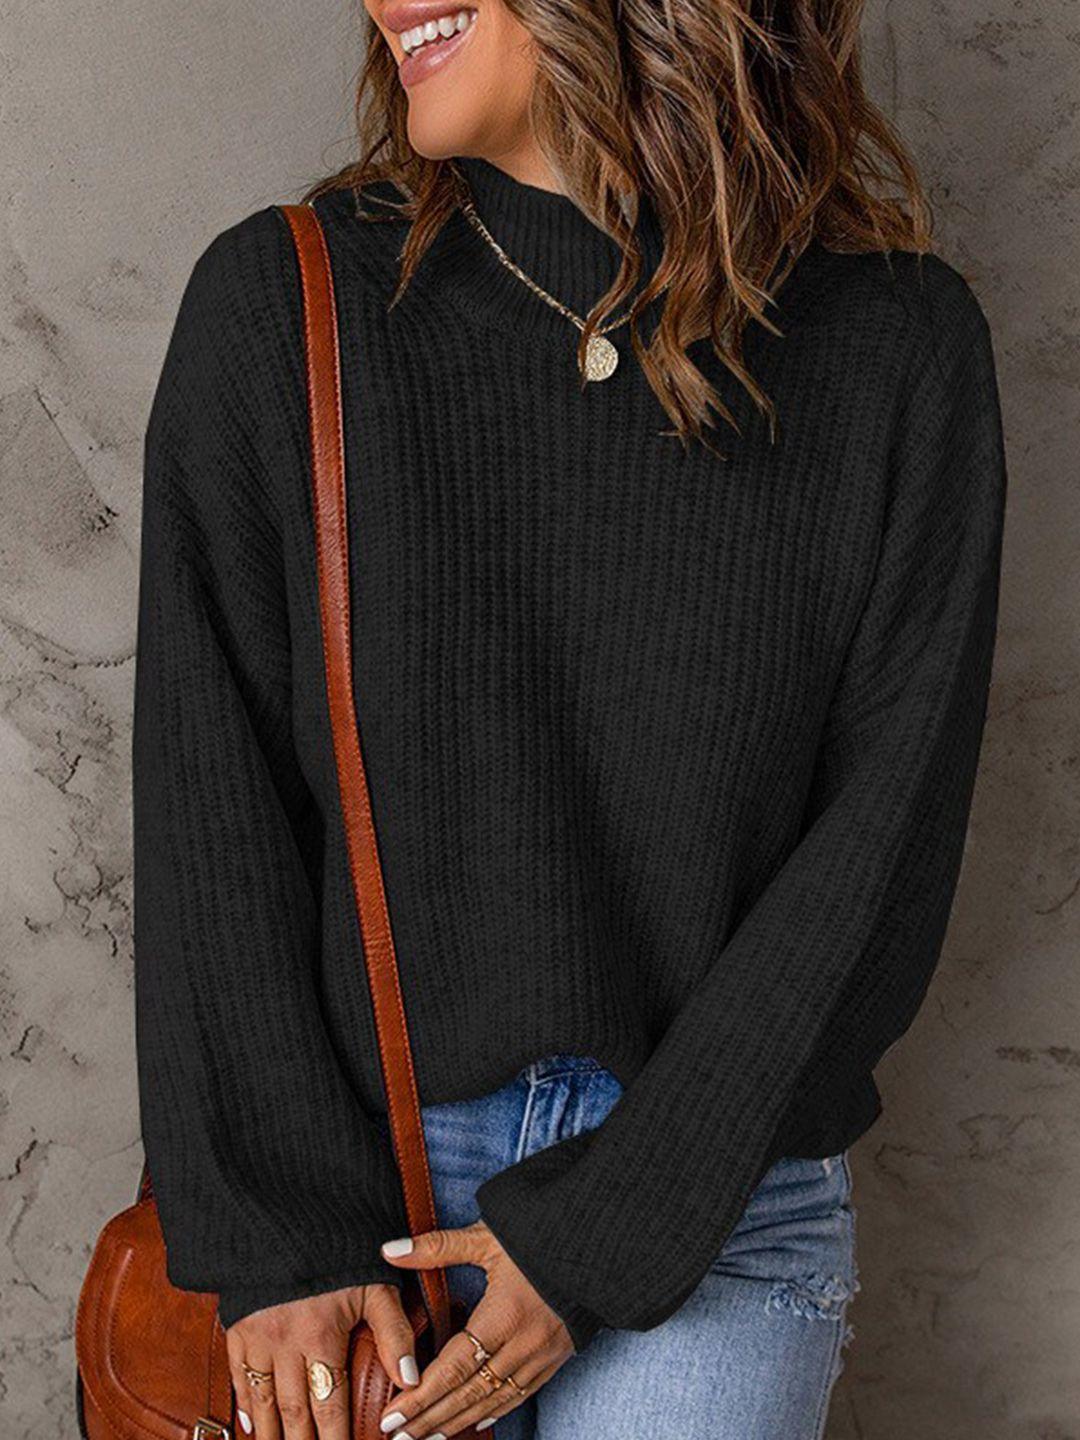 stylecast women black pullover sweater